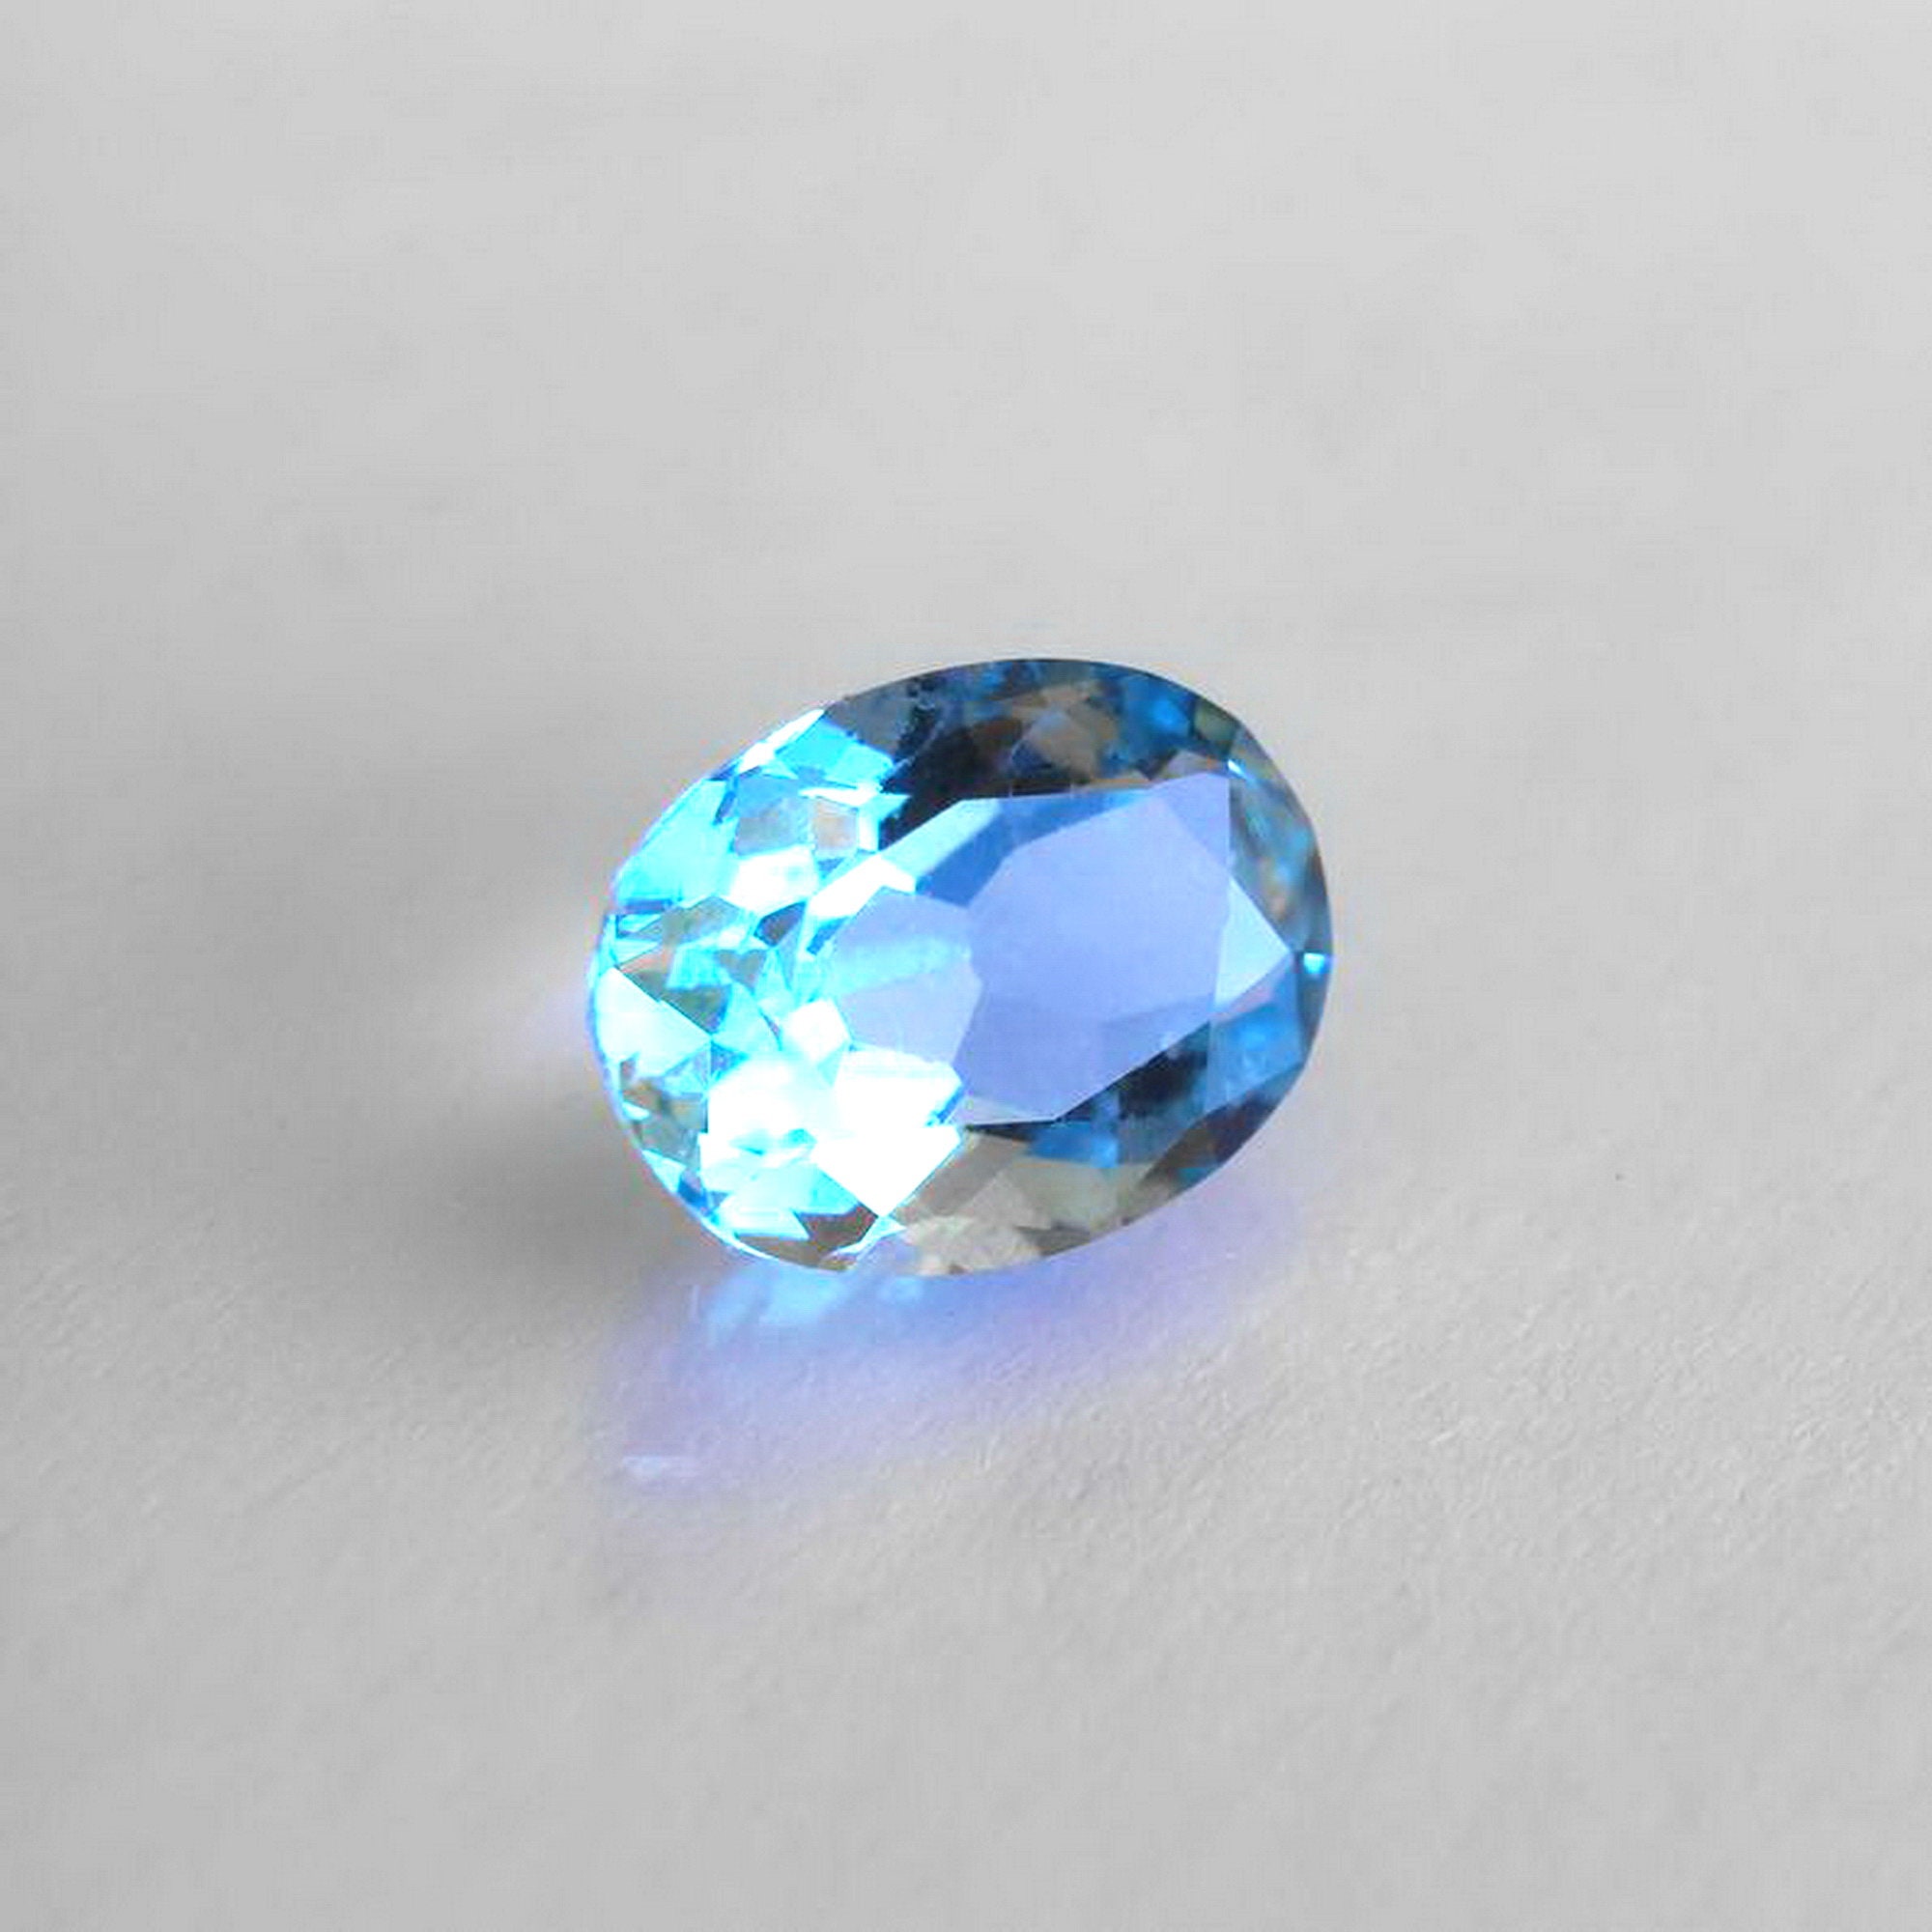 Loose Santa Maria Aquamarine gemstone 4.45ct Oval cut blue | Etsy